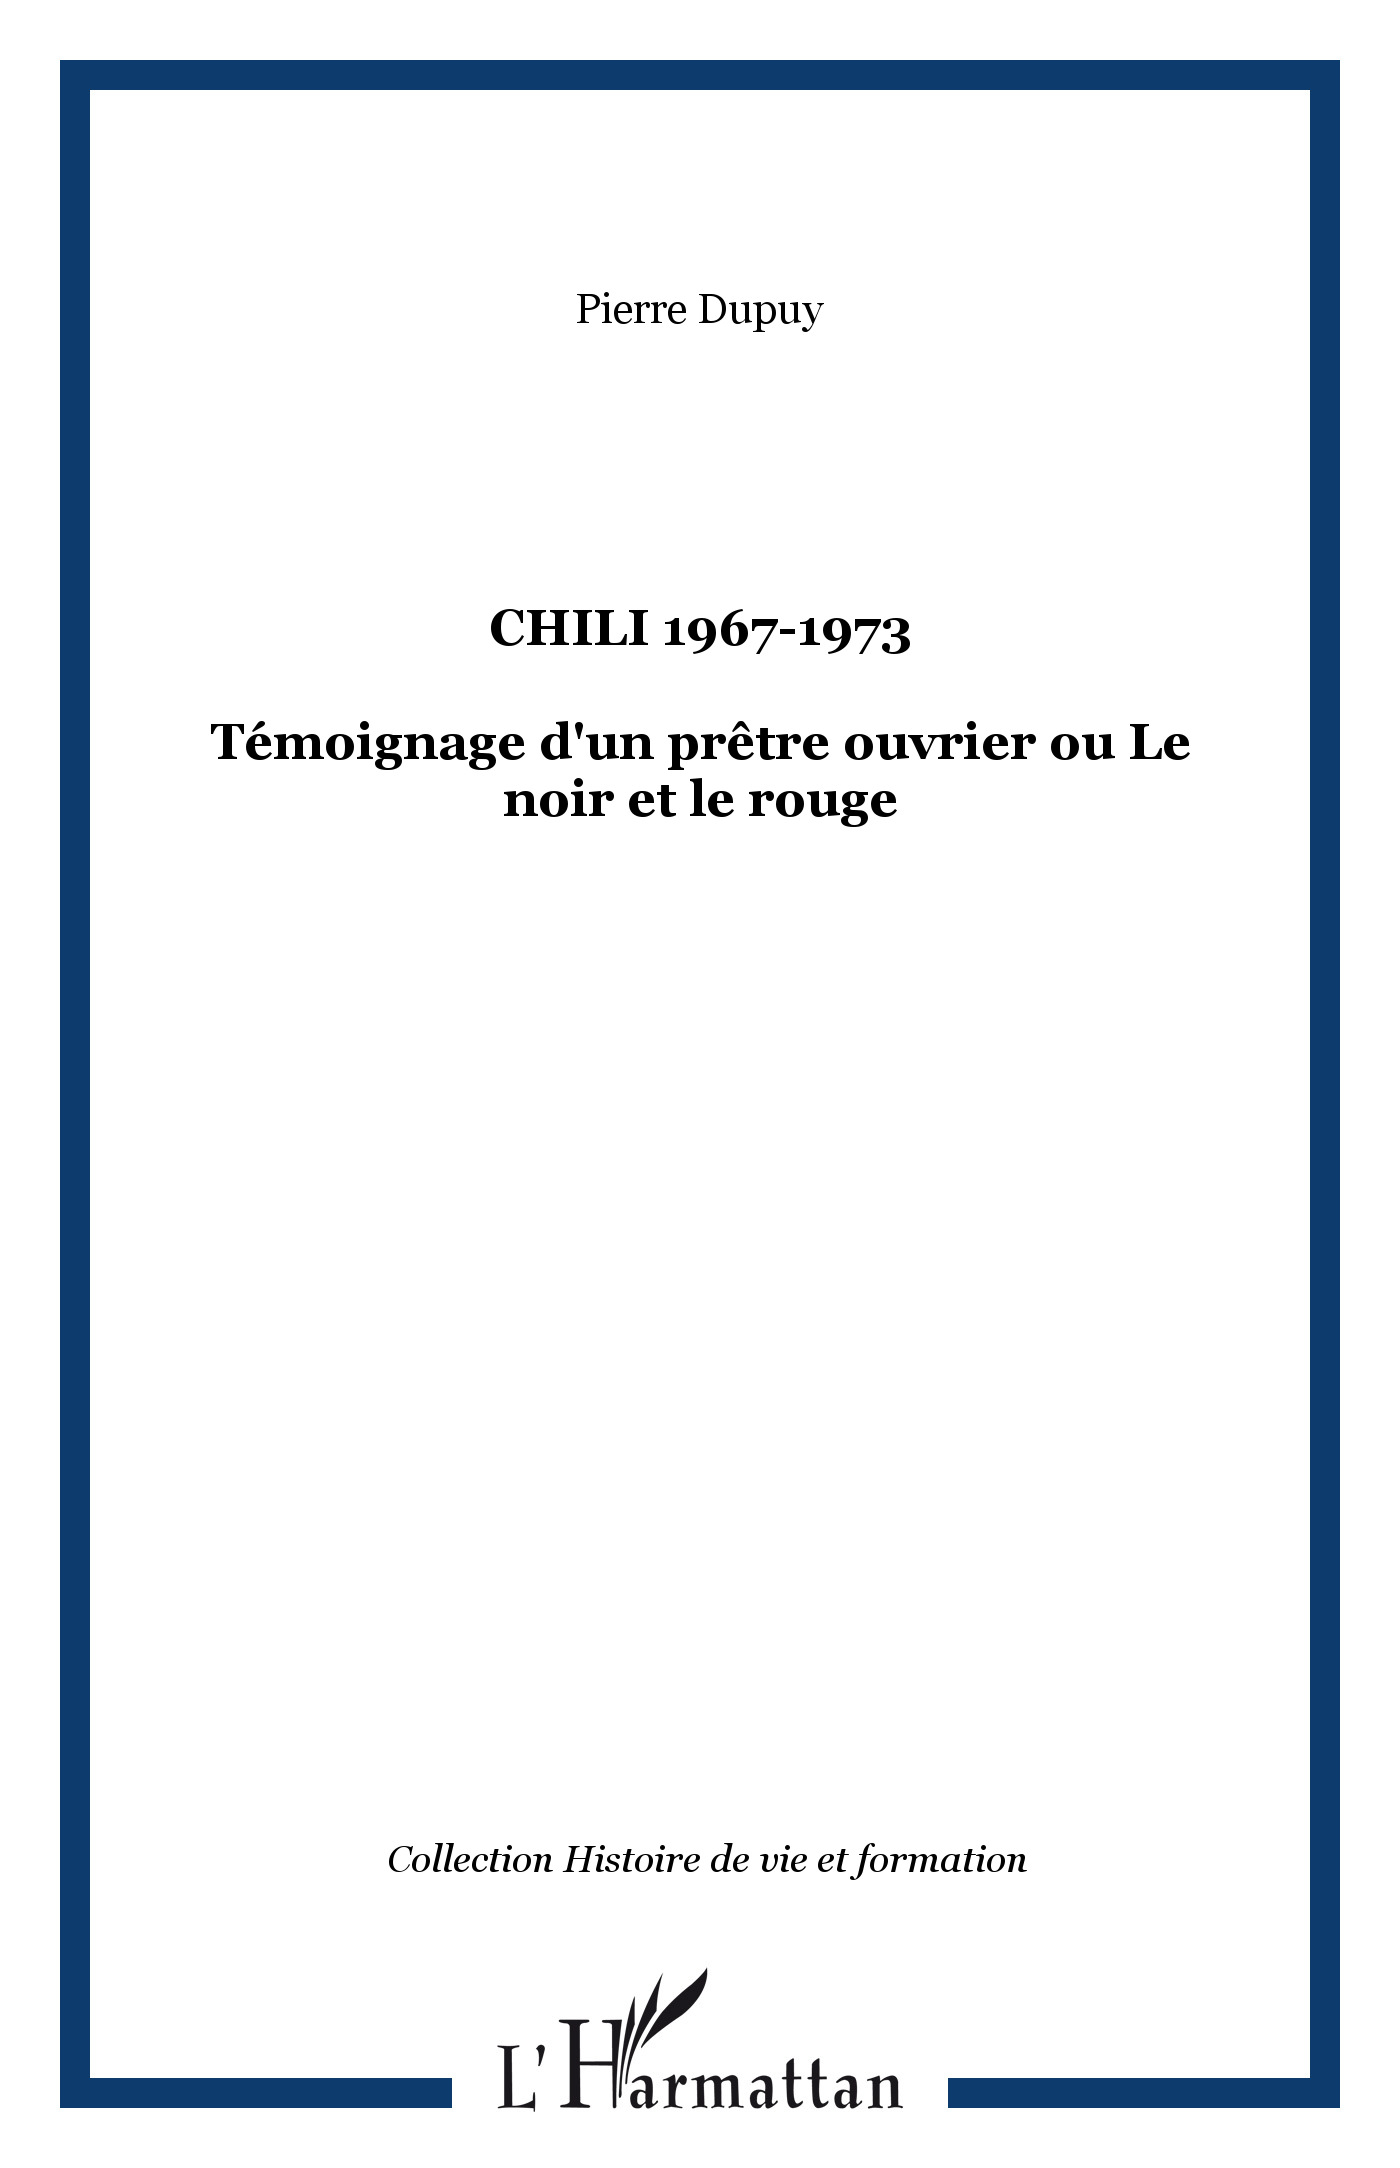 Dupuy, Pierre: Chili, 1967-1973 (Paperback, French language, 2000, Harmattan)